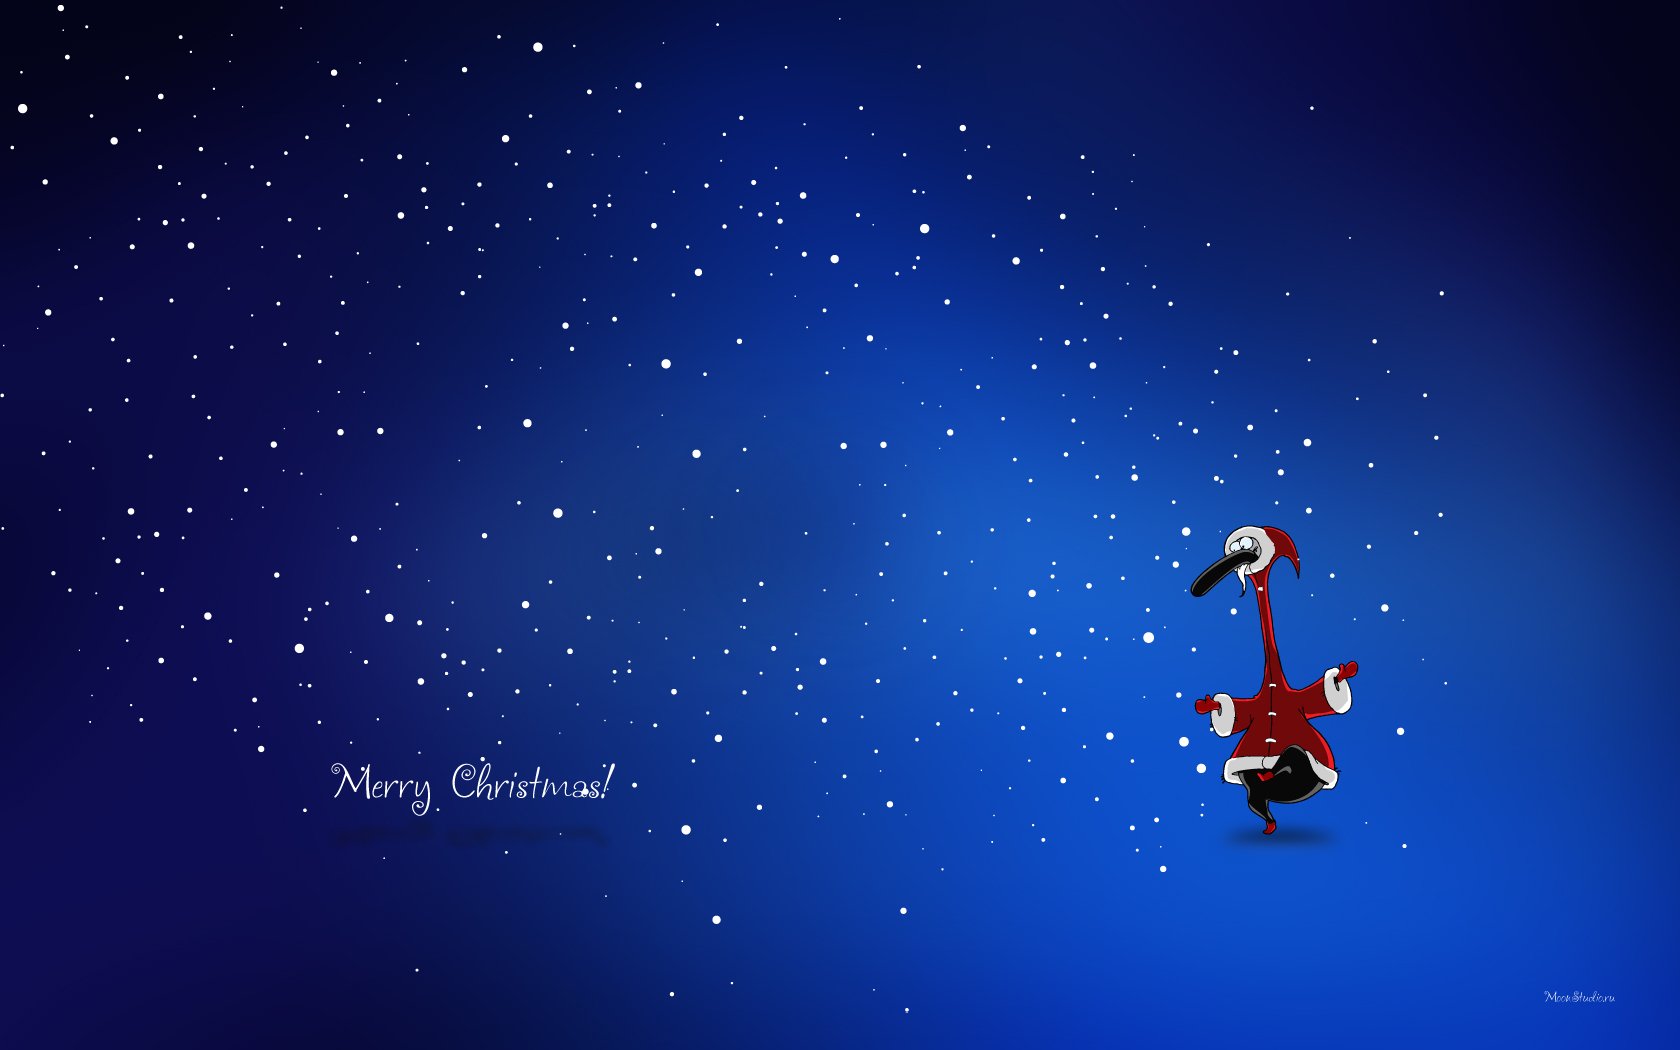 Cute Cartoon Christmas Wallpaper HD In Celebrations